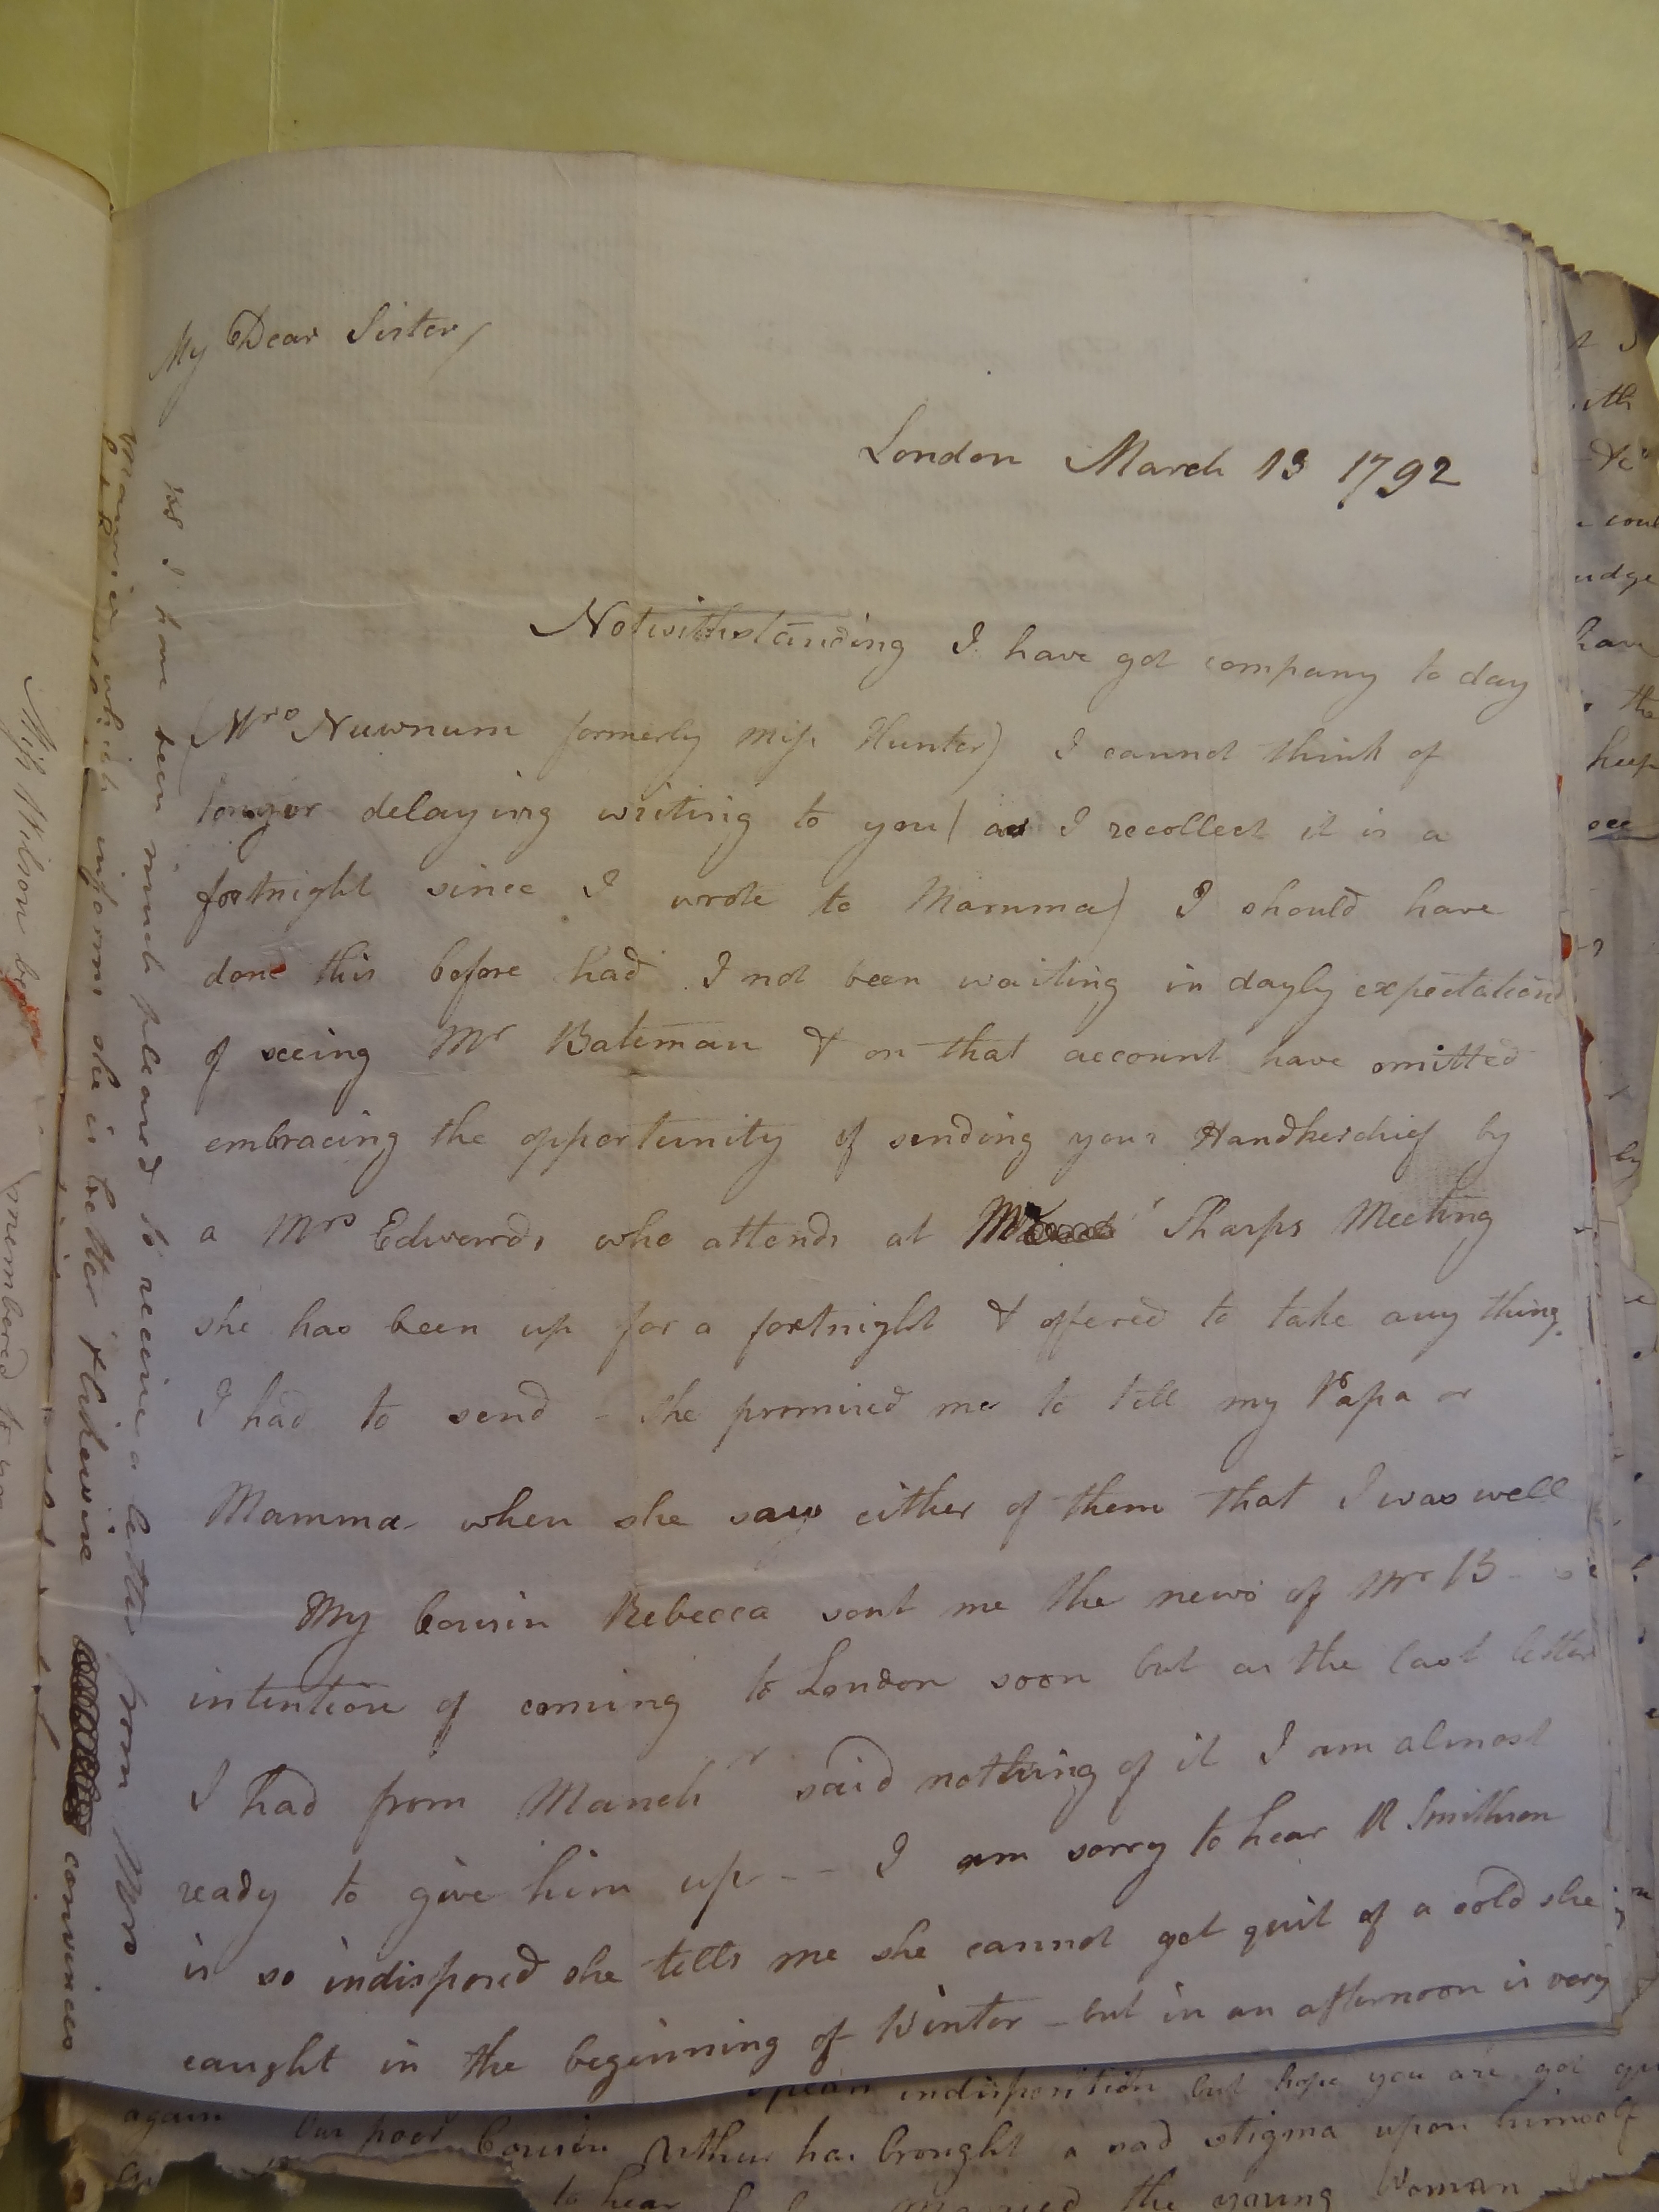 Image #1 of letter: Elizabeth Wilson to Rebekah Bateman, 13 March 1792